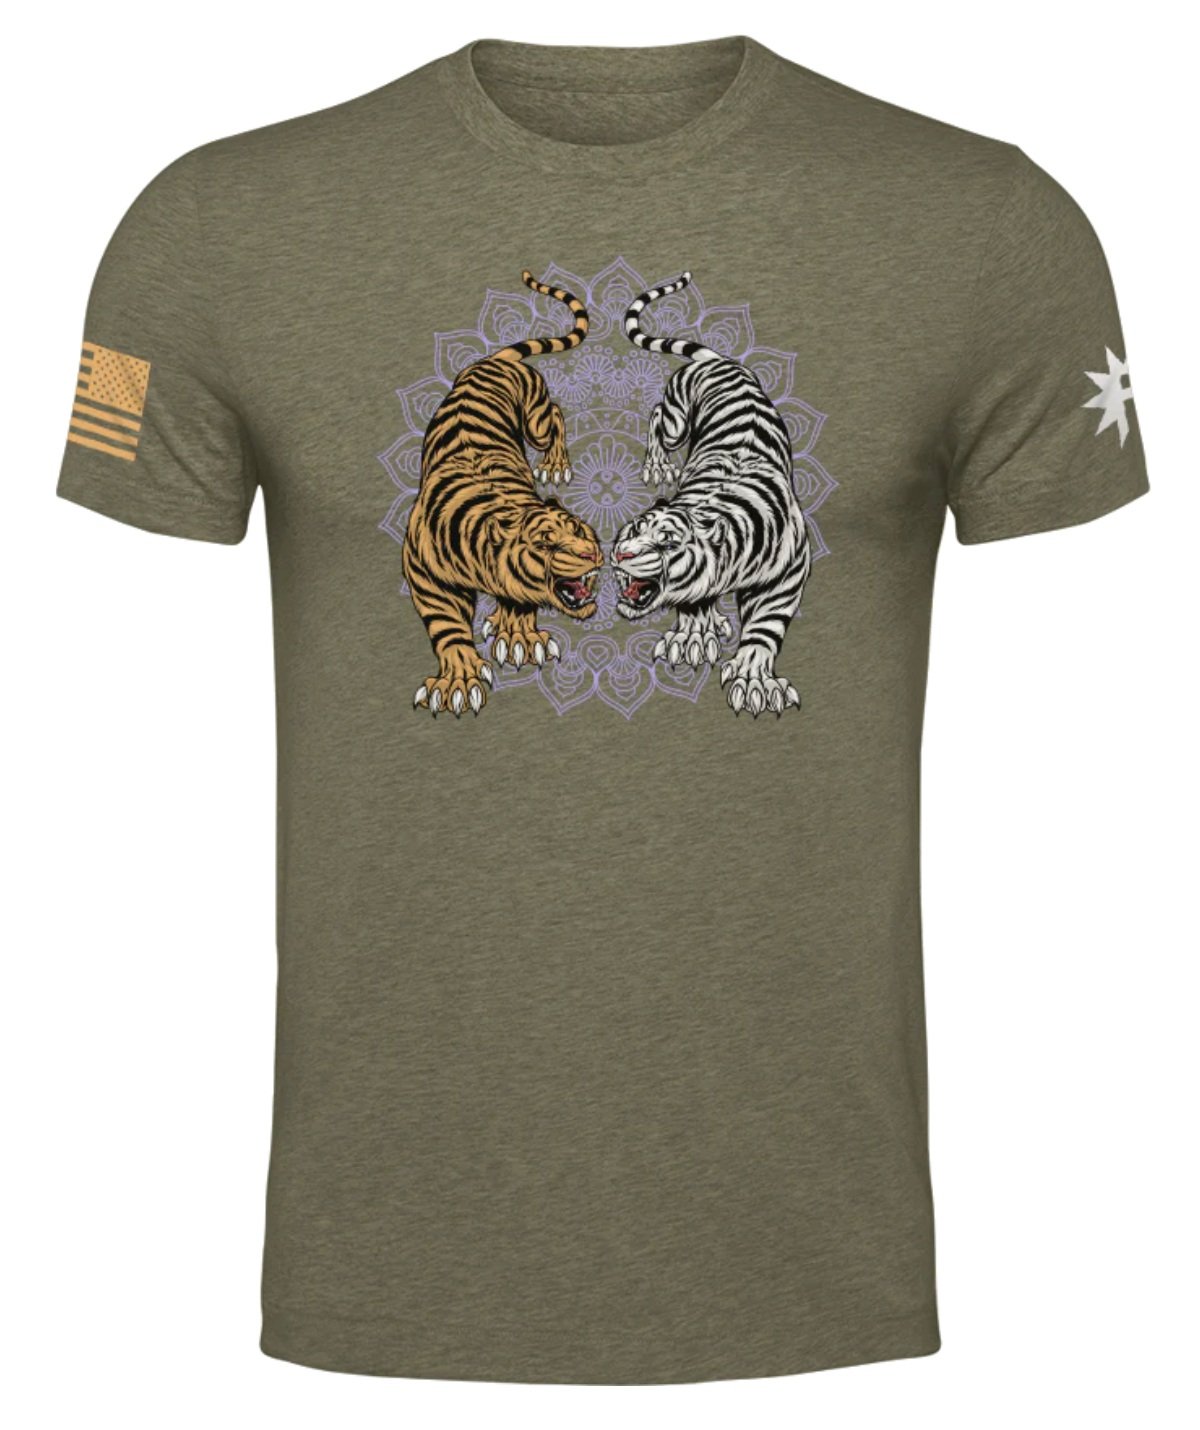 Two Tiger Adventure Shirt